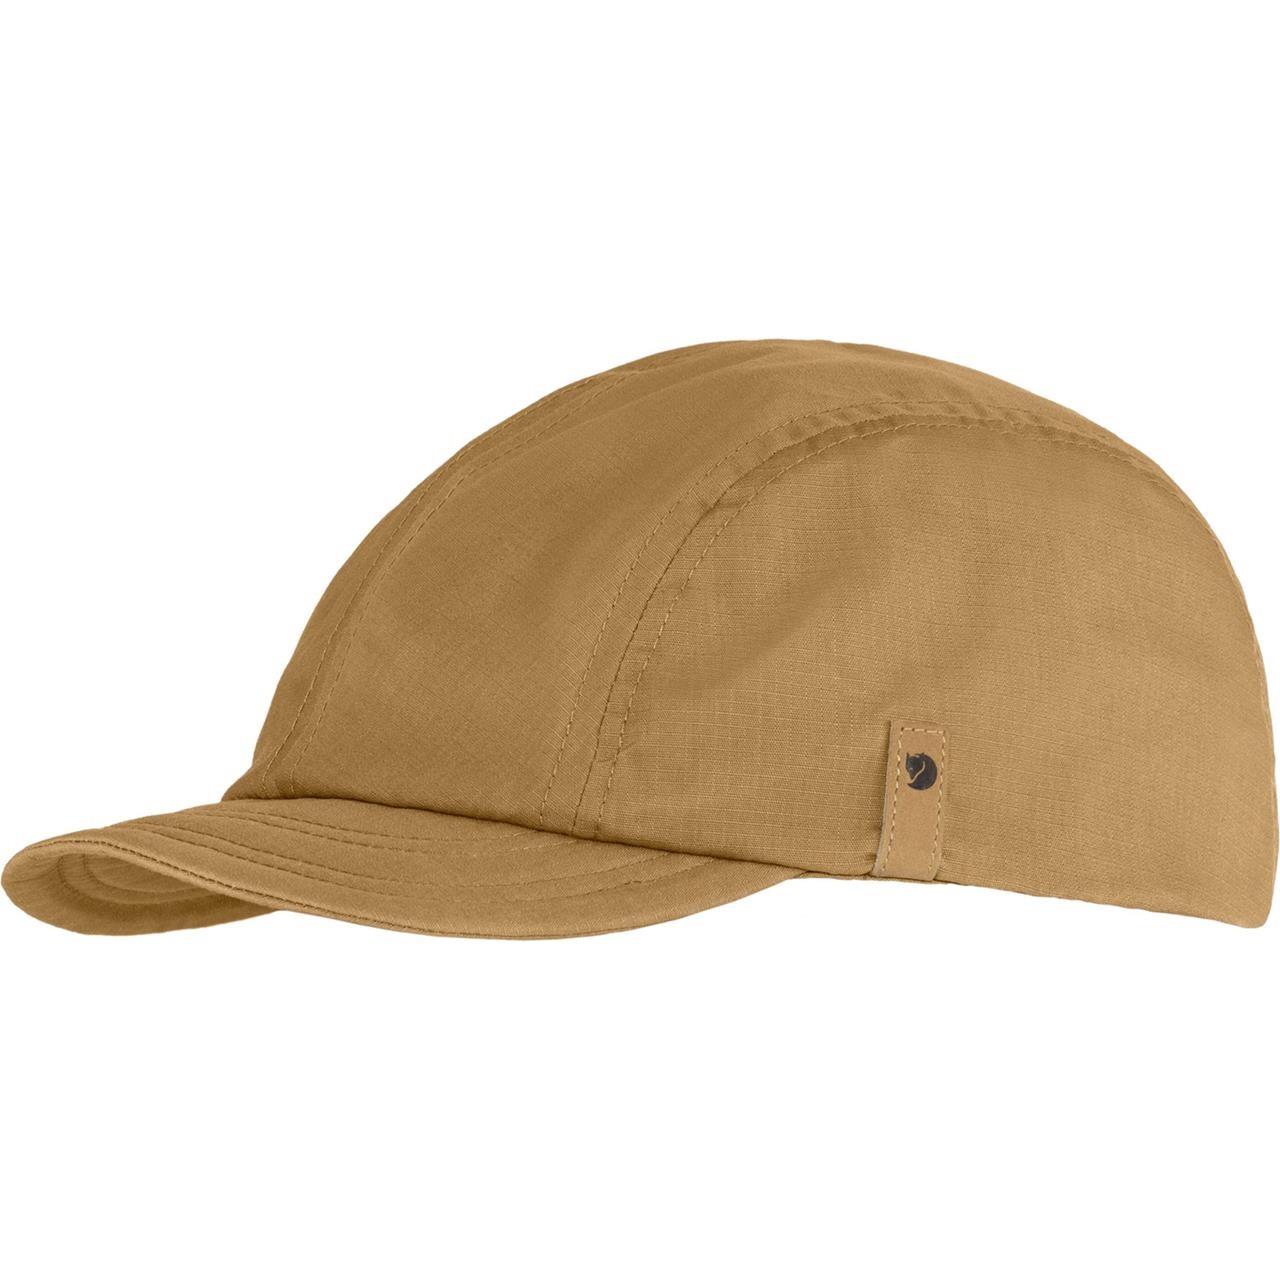 Se Fjällräven Abisko Pack Cap-buckwheat brown - Baseball cap, kasket hos Friluftsland.dk